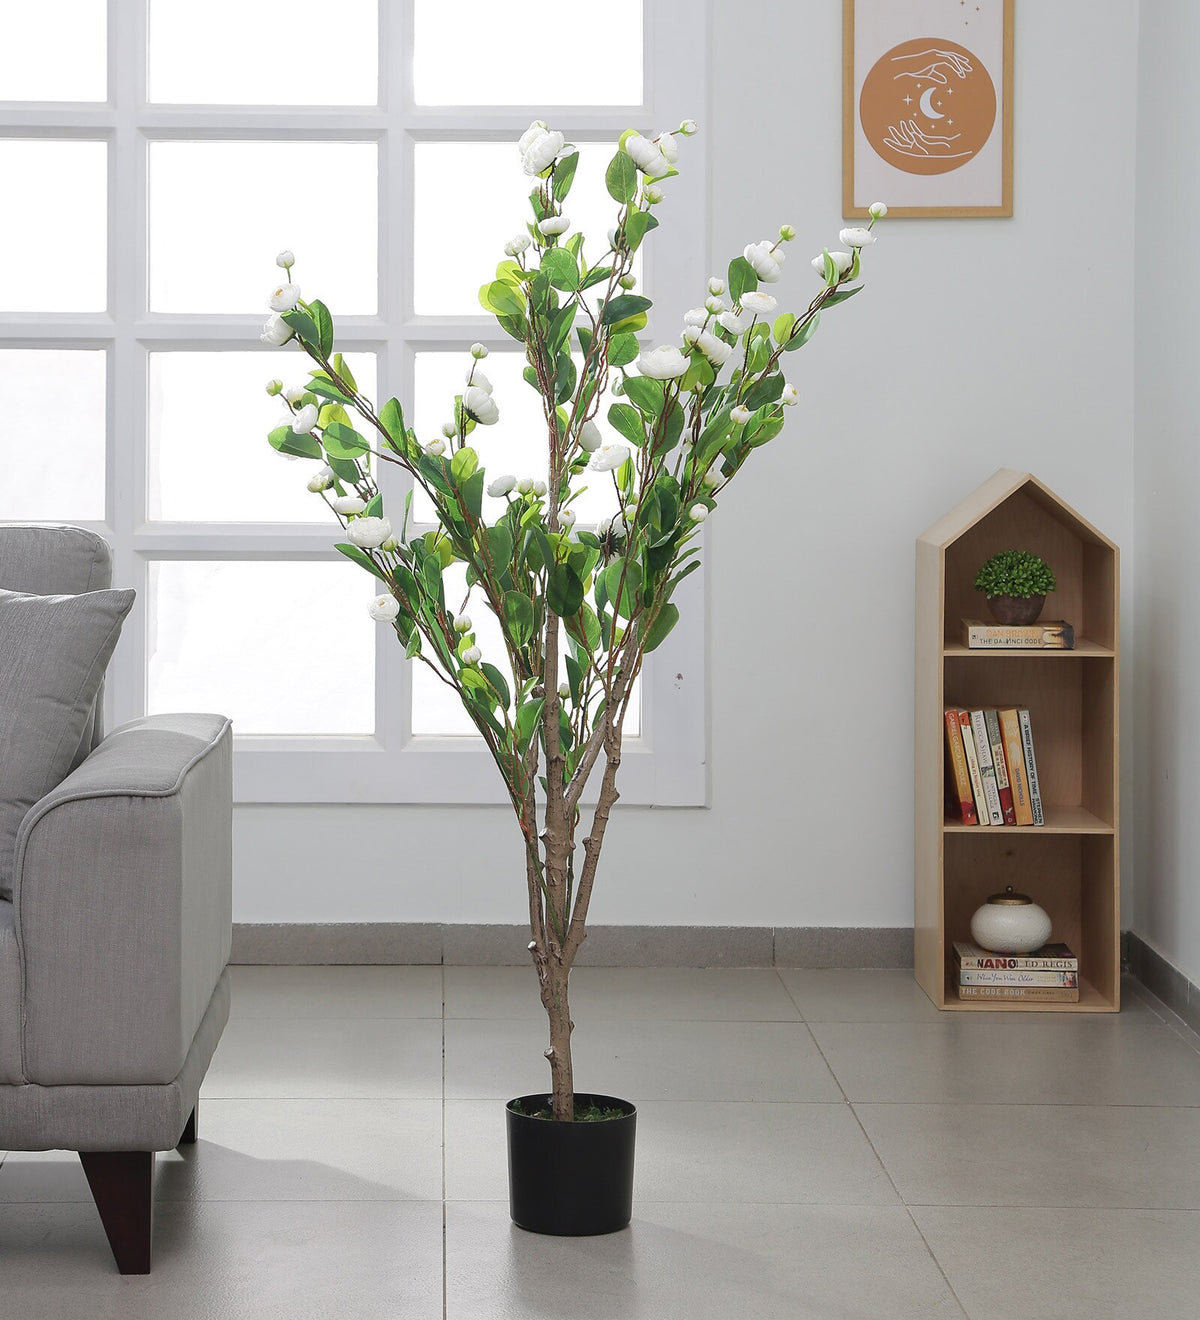 Beautiful Artificial Camellia Flower Plant in a Black Pot for Interior Decor/Home Decor/Office Decor (120 cm Tall, White)